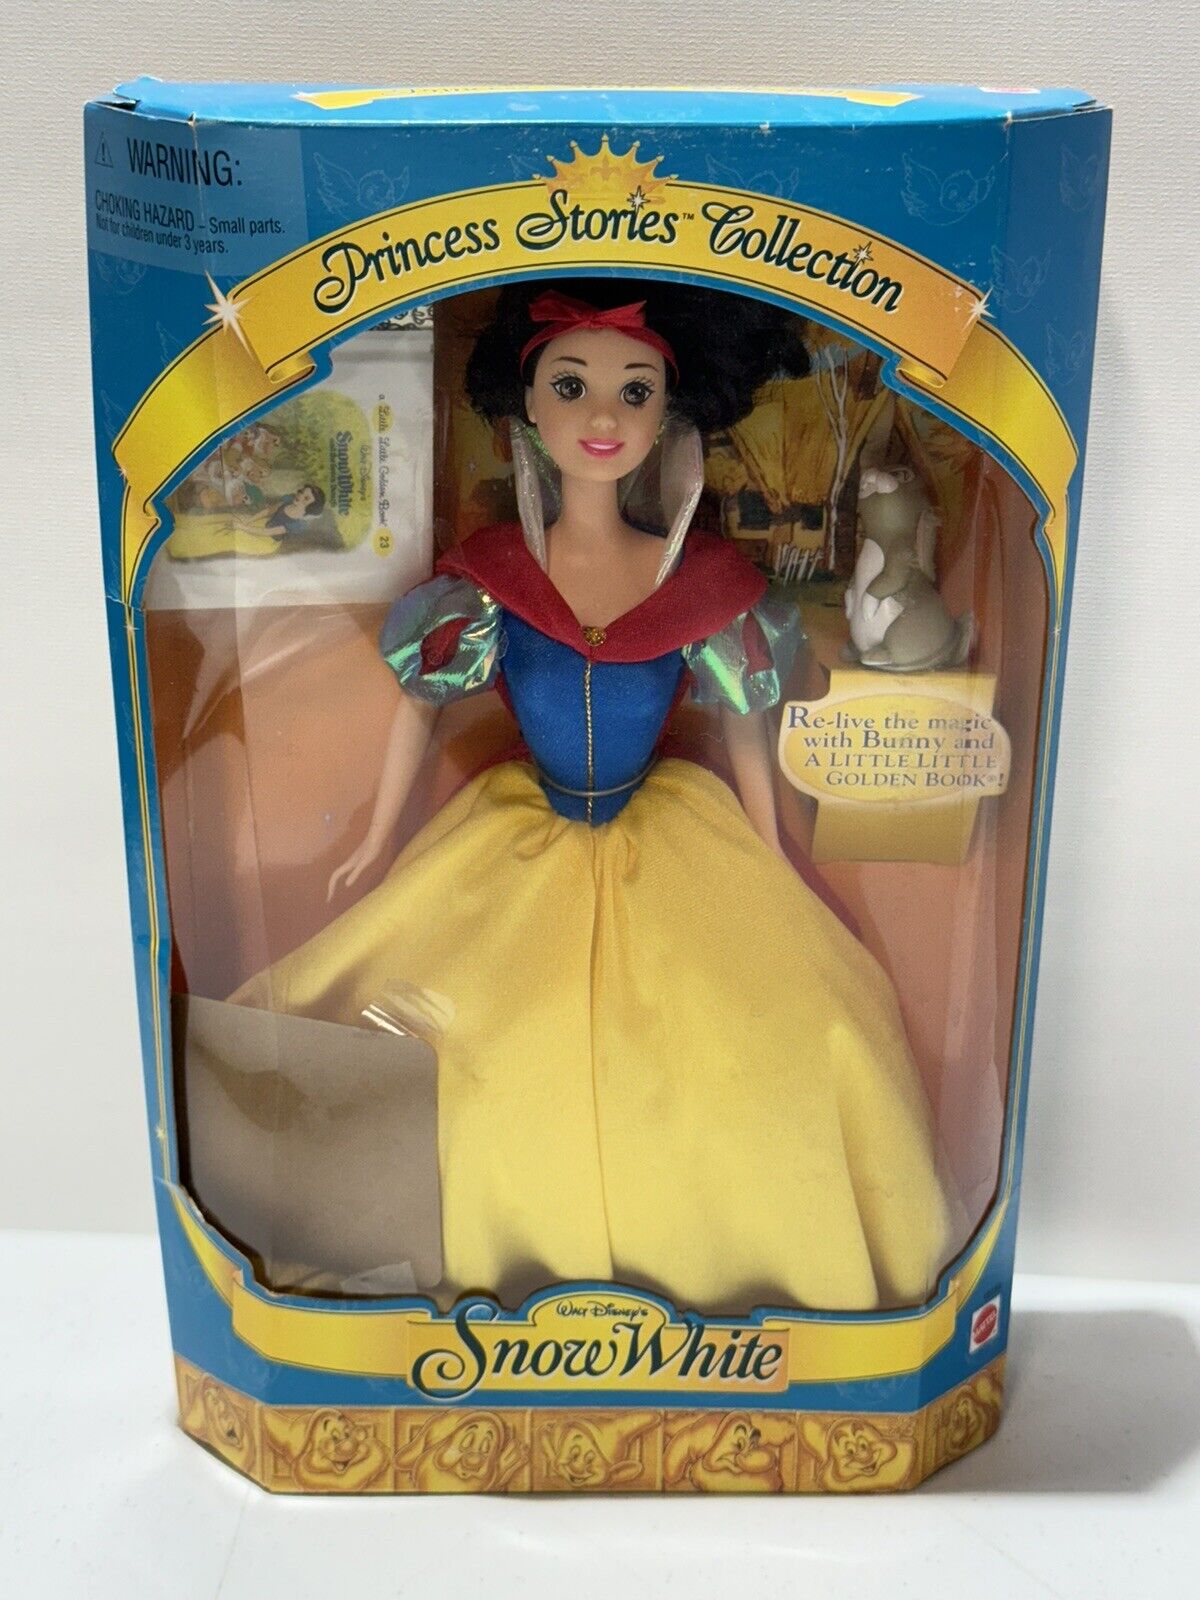 1997 Disney Princess Stories Collection Complete Snow White Mattel Barbie Doll